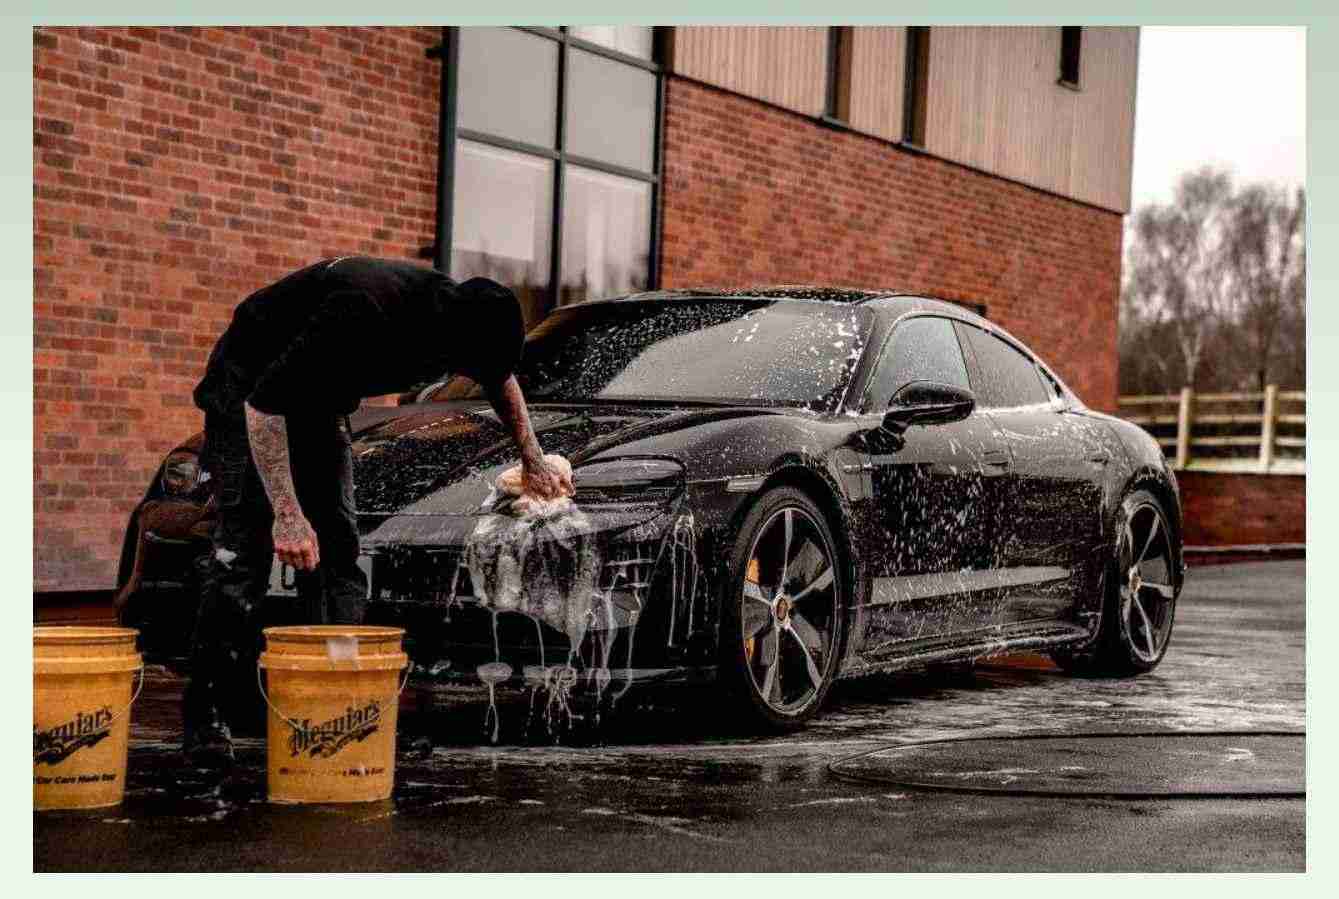 small business ideas - car wash service.jpg